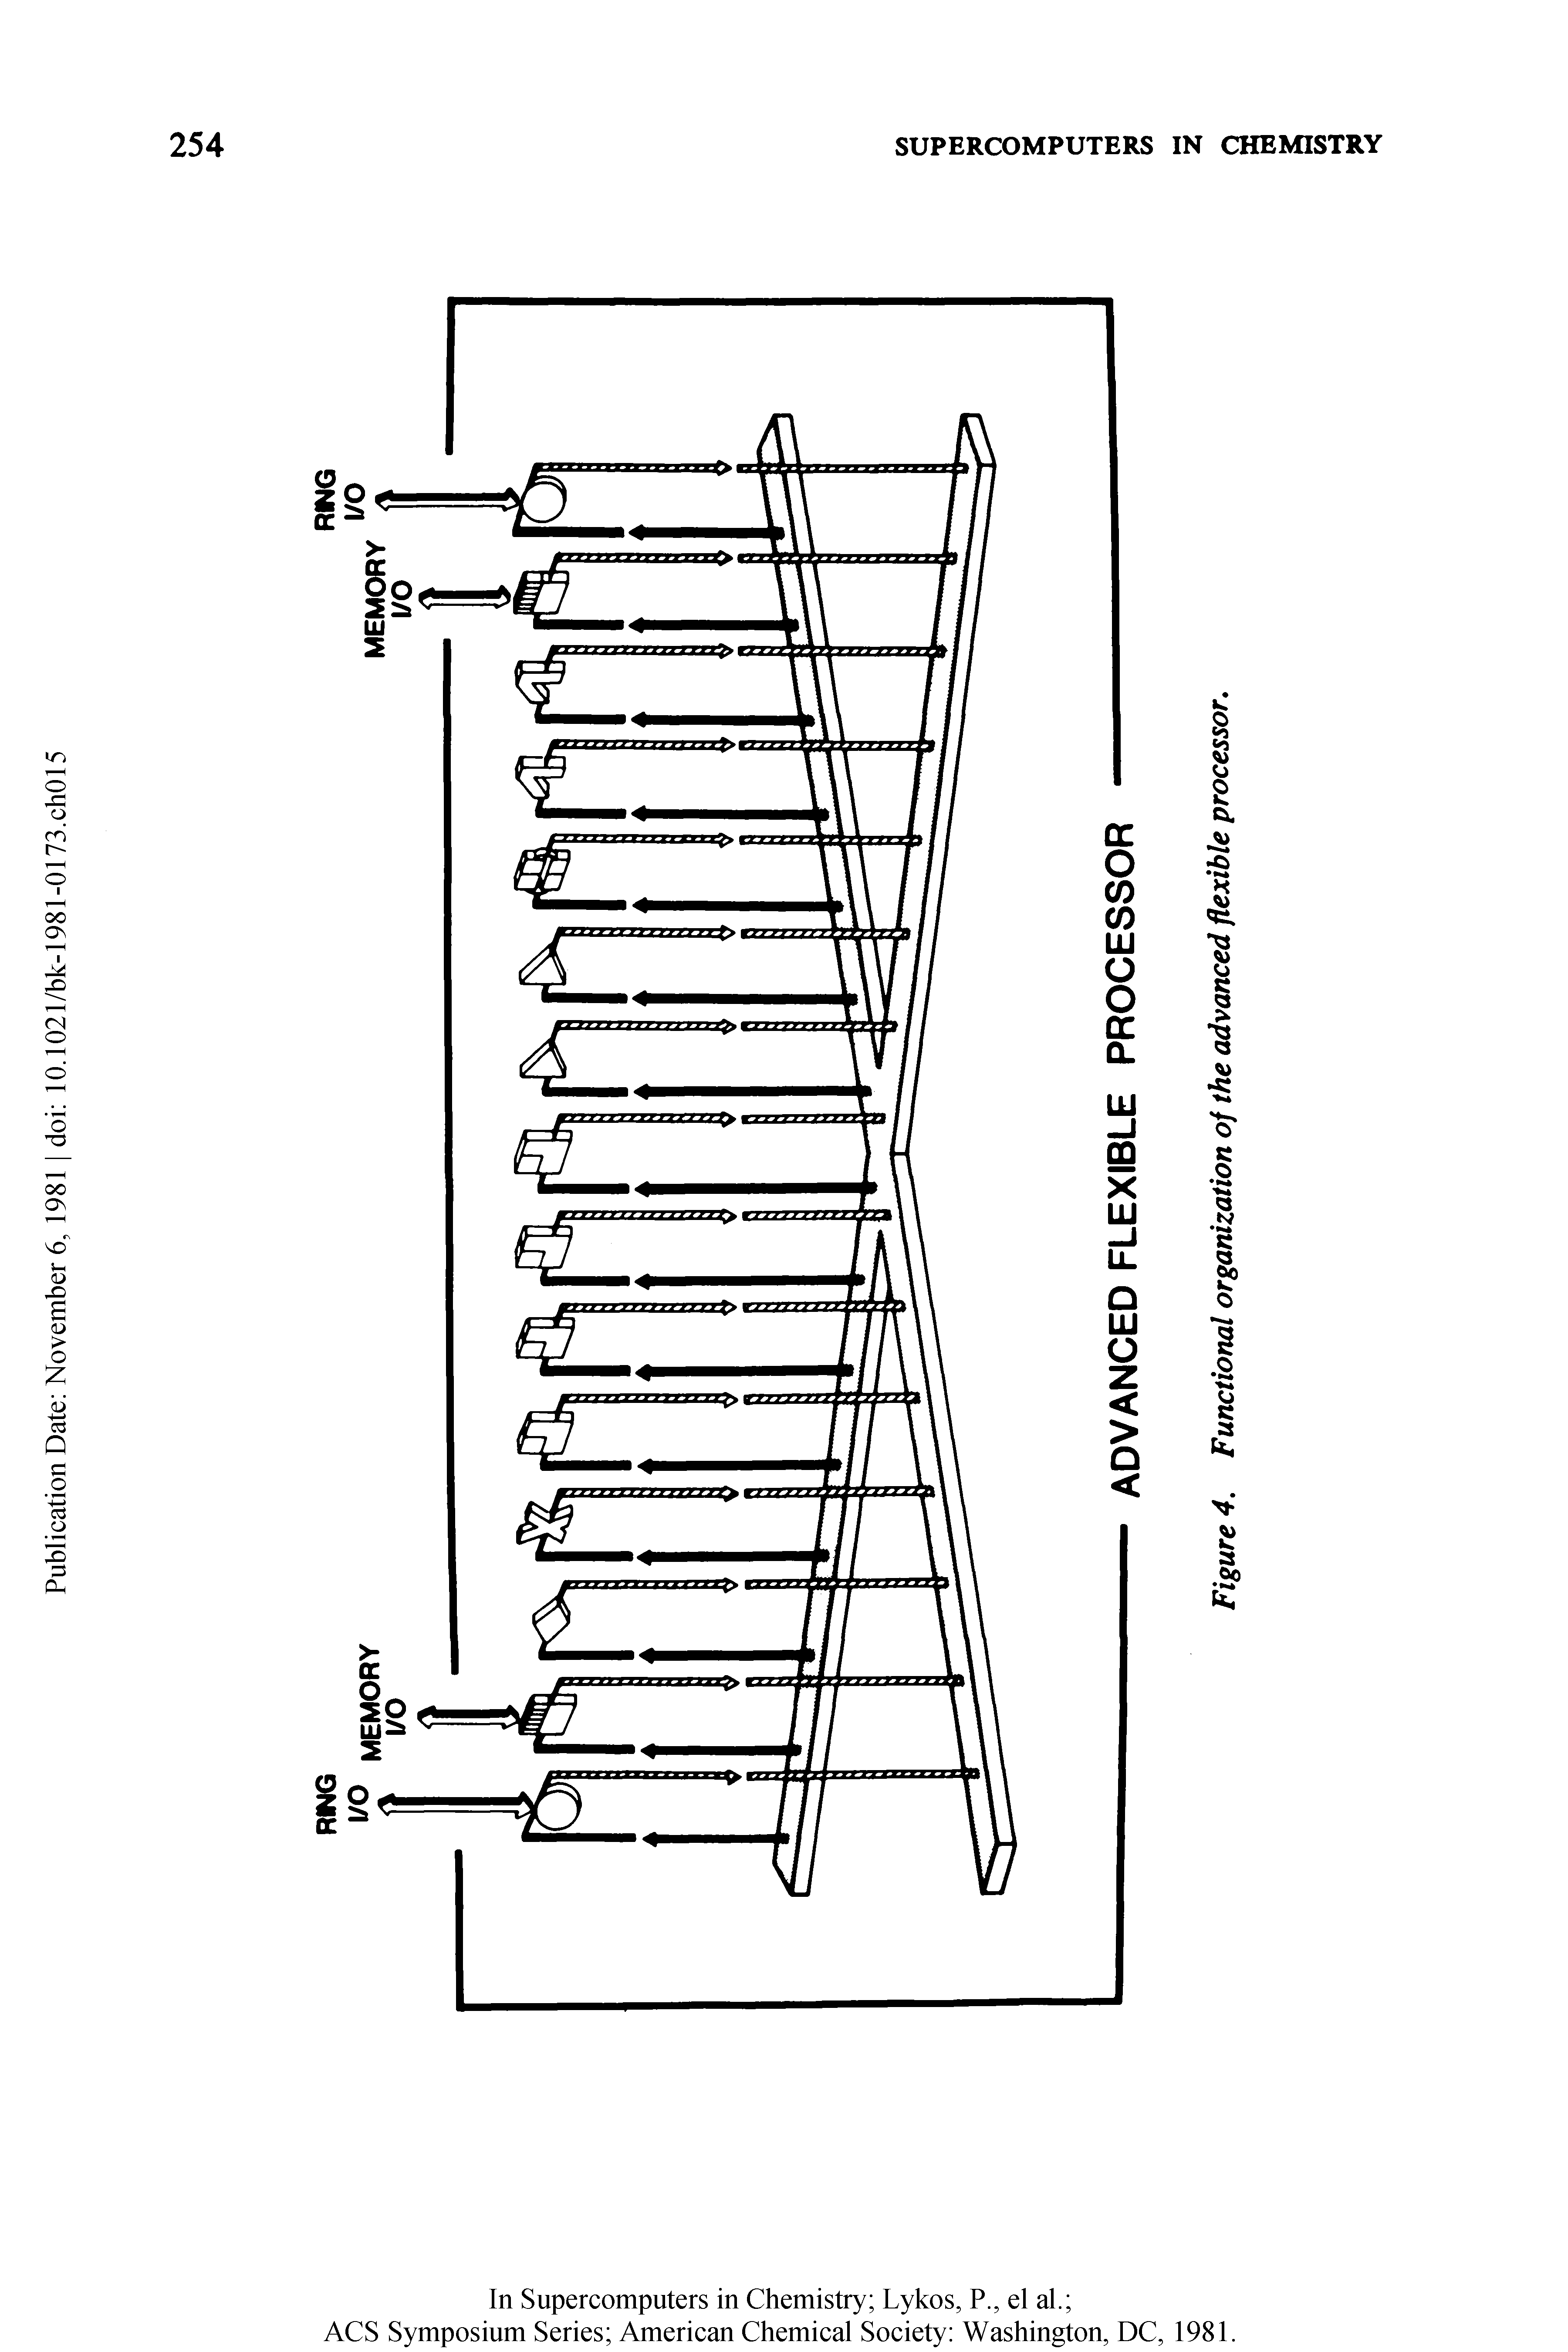 Figure 4. Functional organization of the advanced flexible processor.